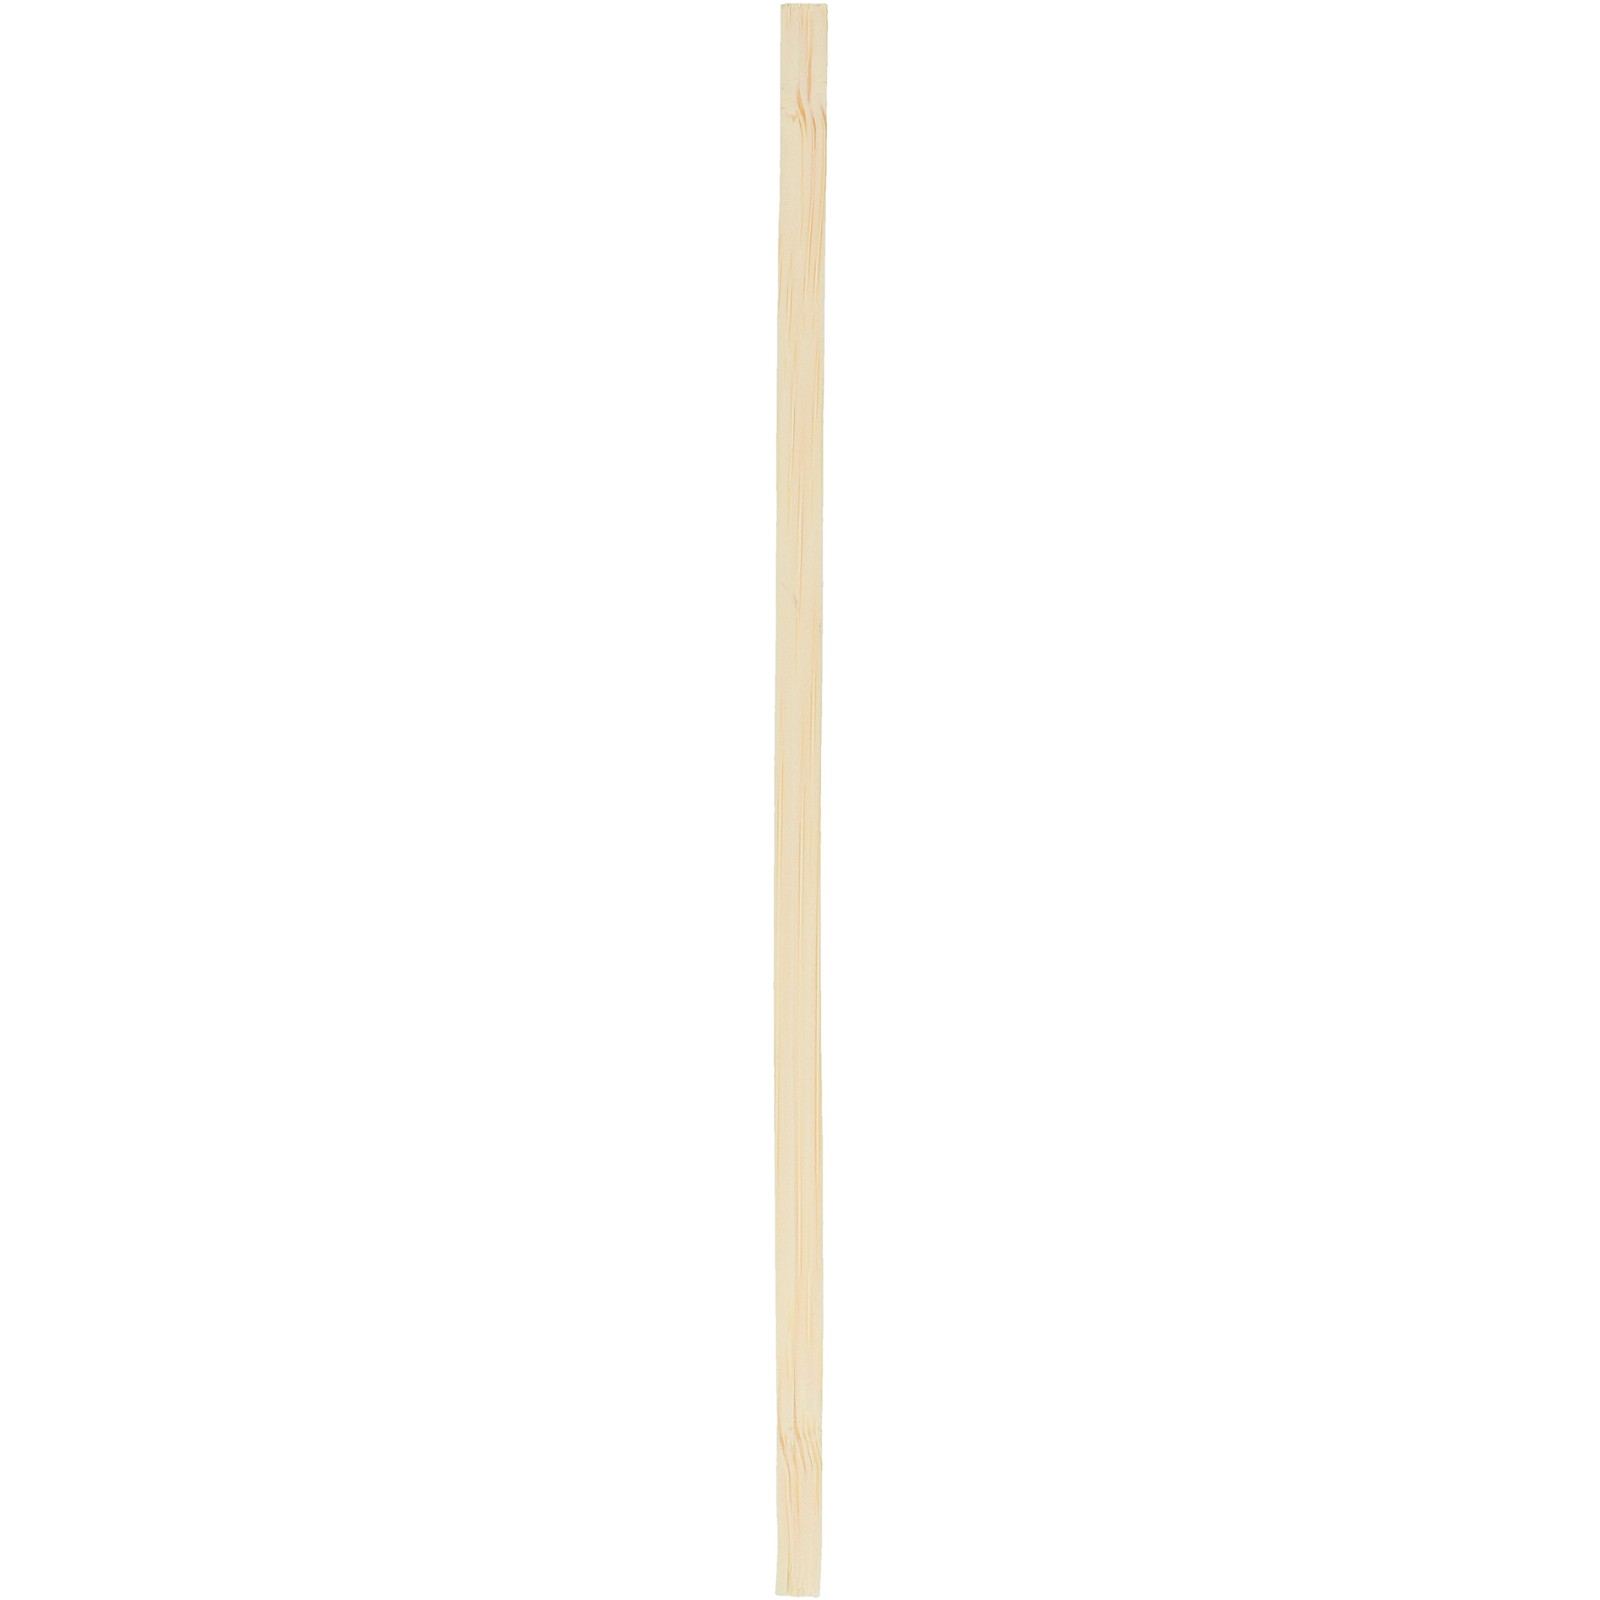 Verive rørepinde bambus 175mm 500 stk